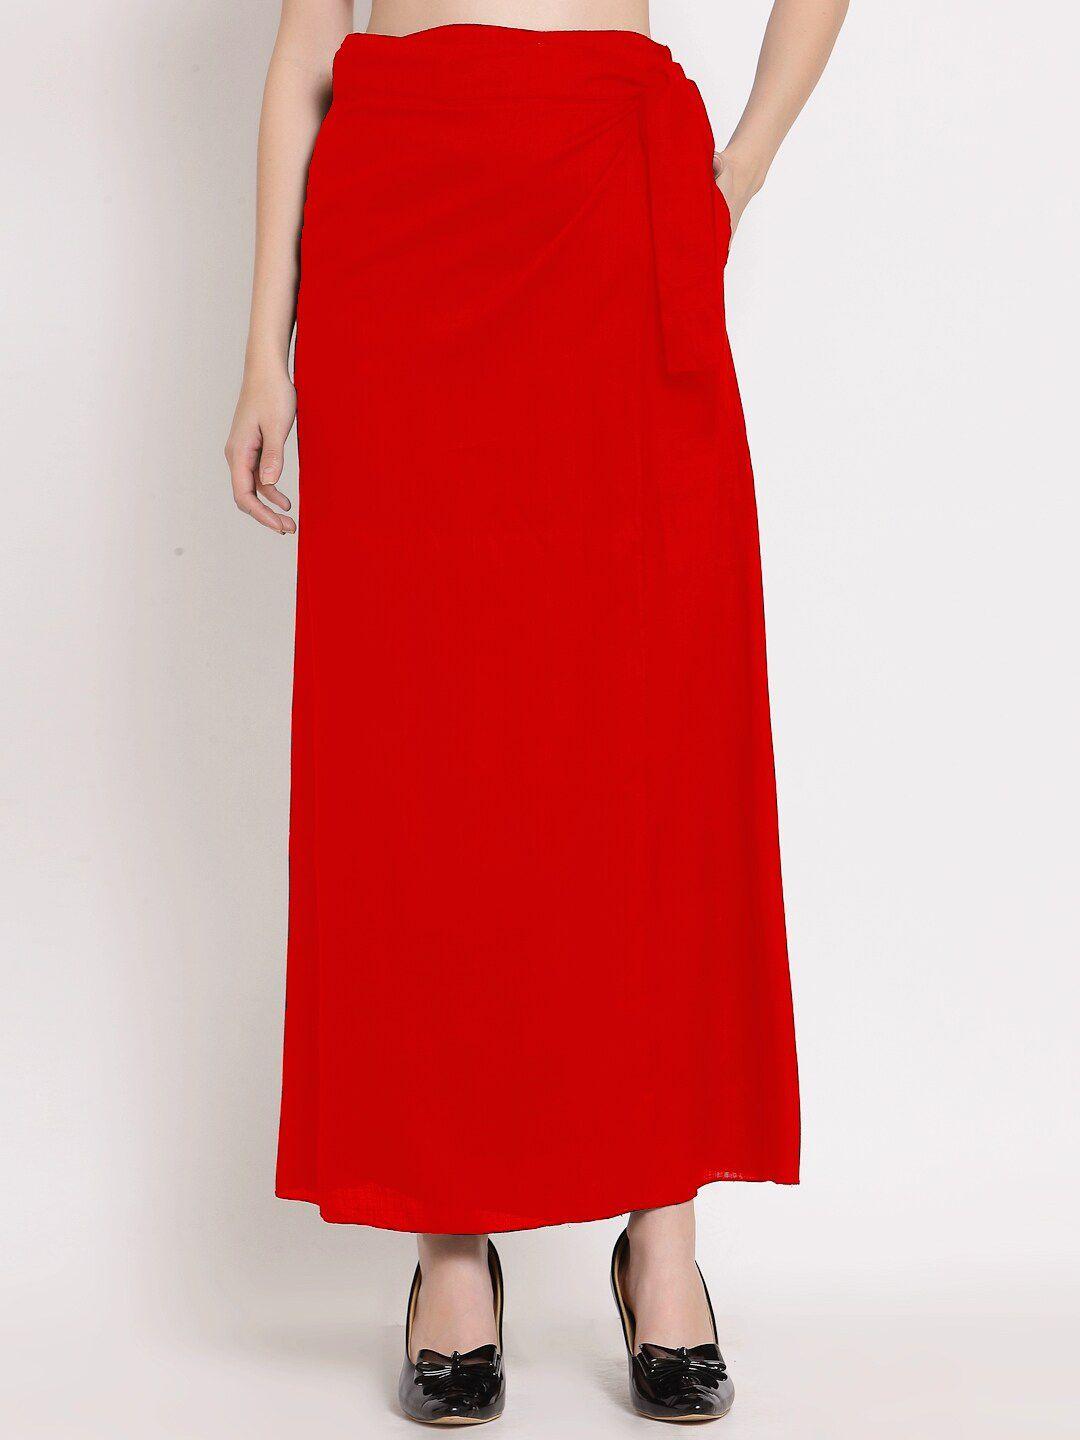 patrorna-red-skirts